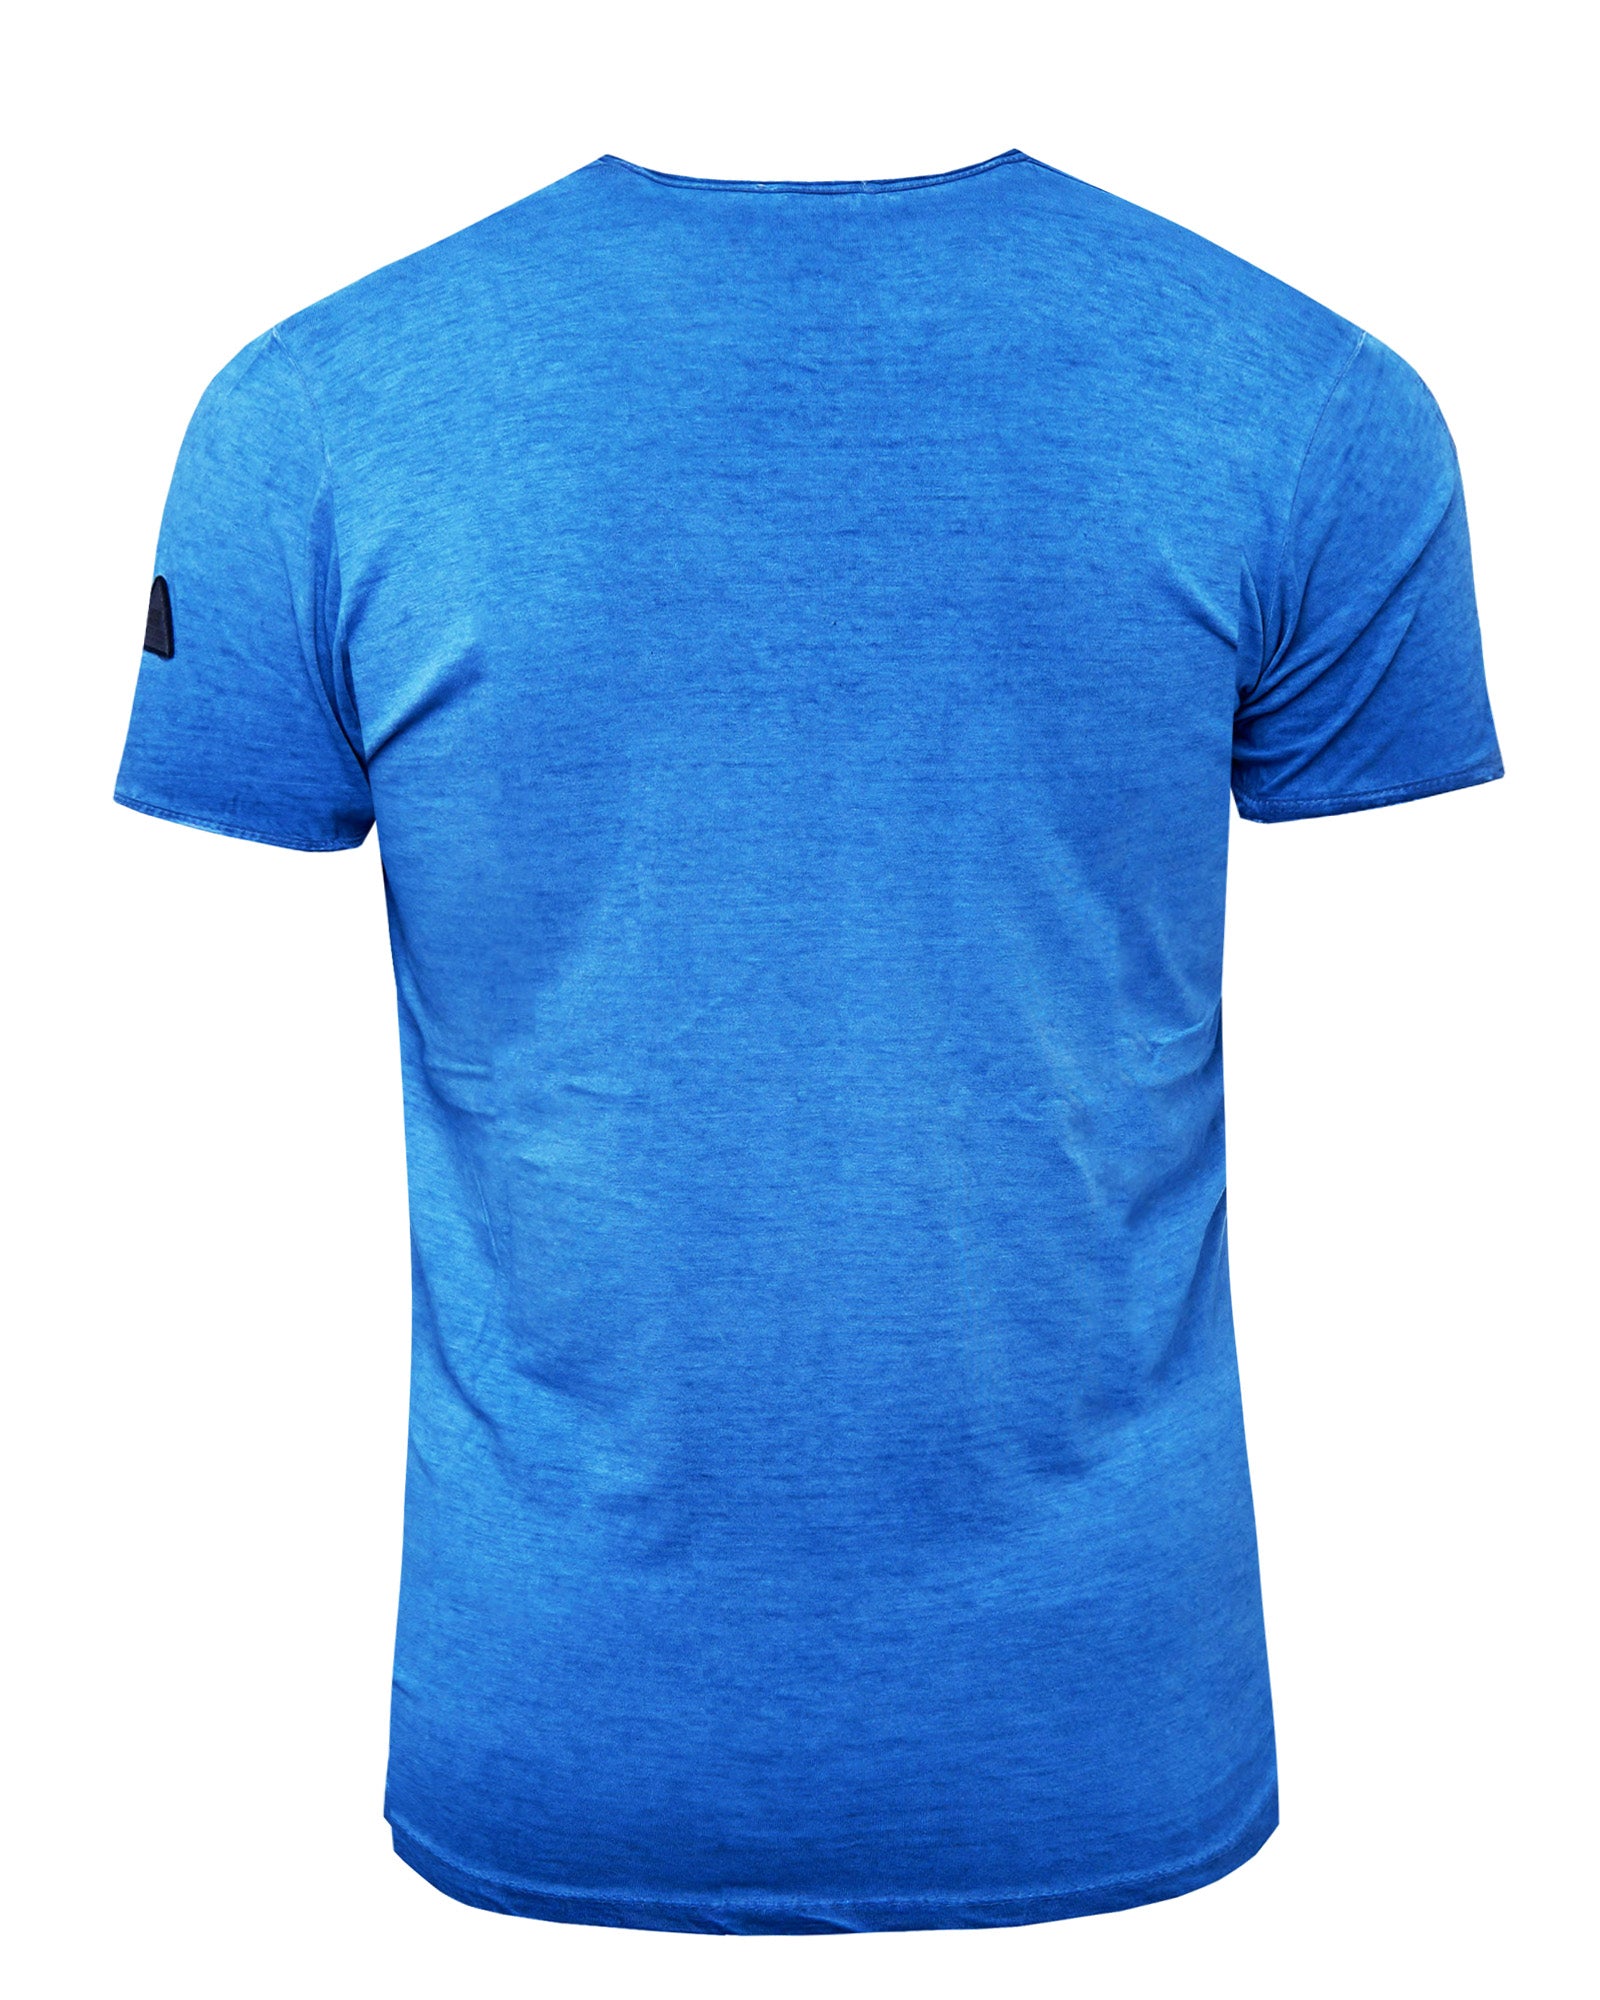 Stwrring crew t-shirt - Blue